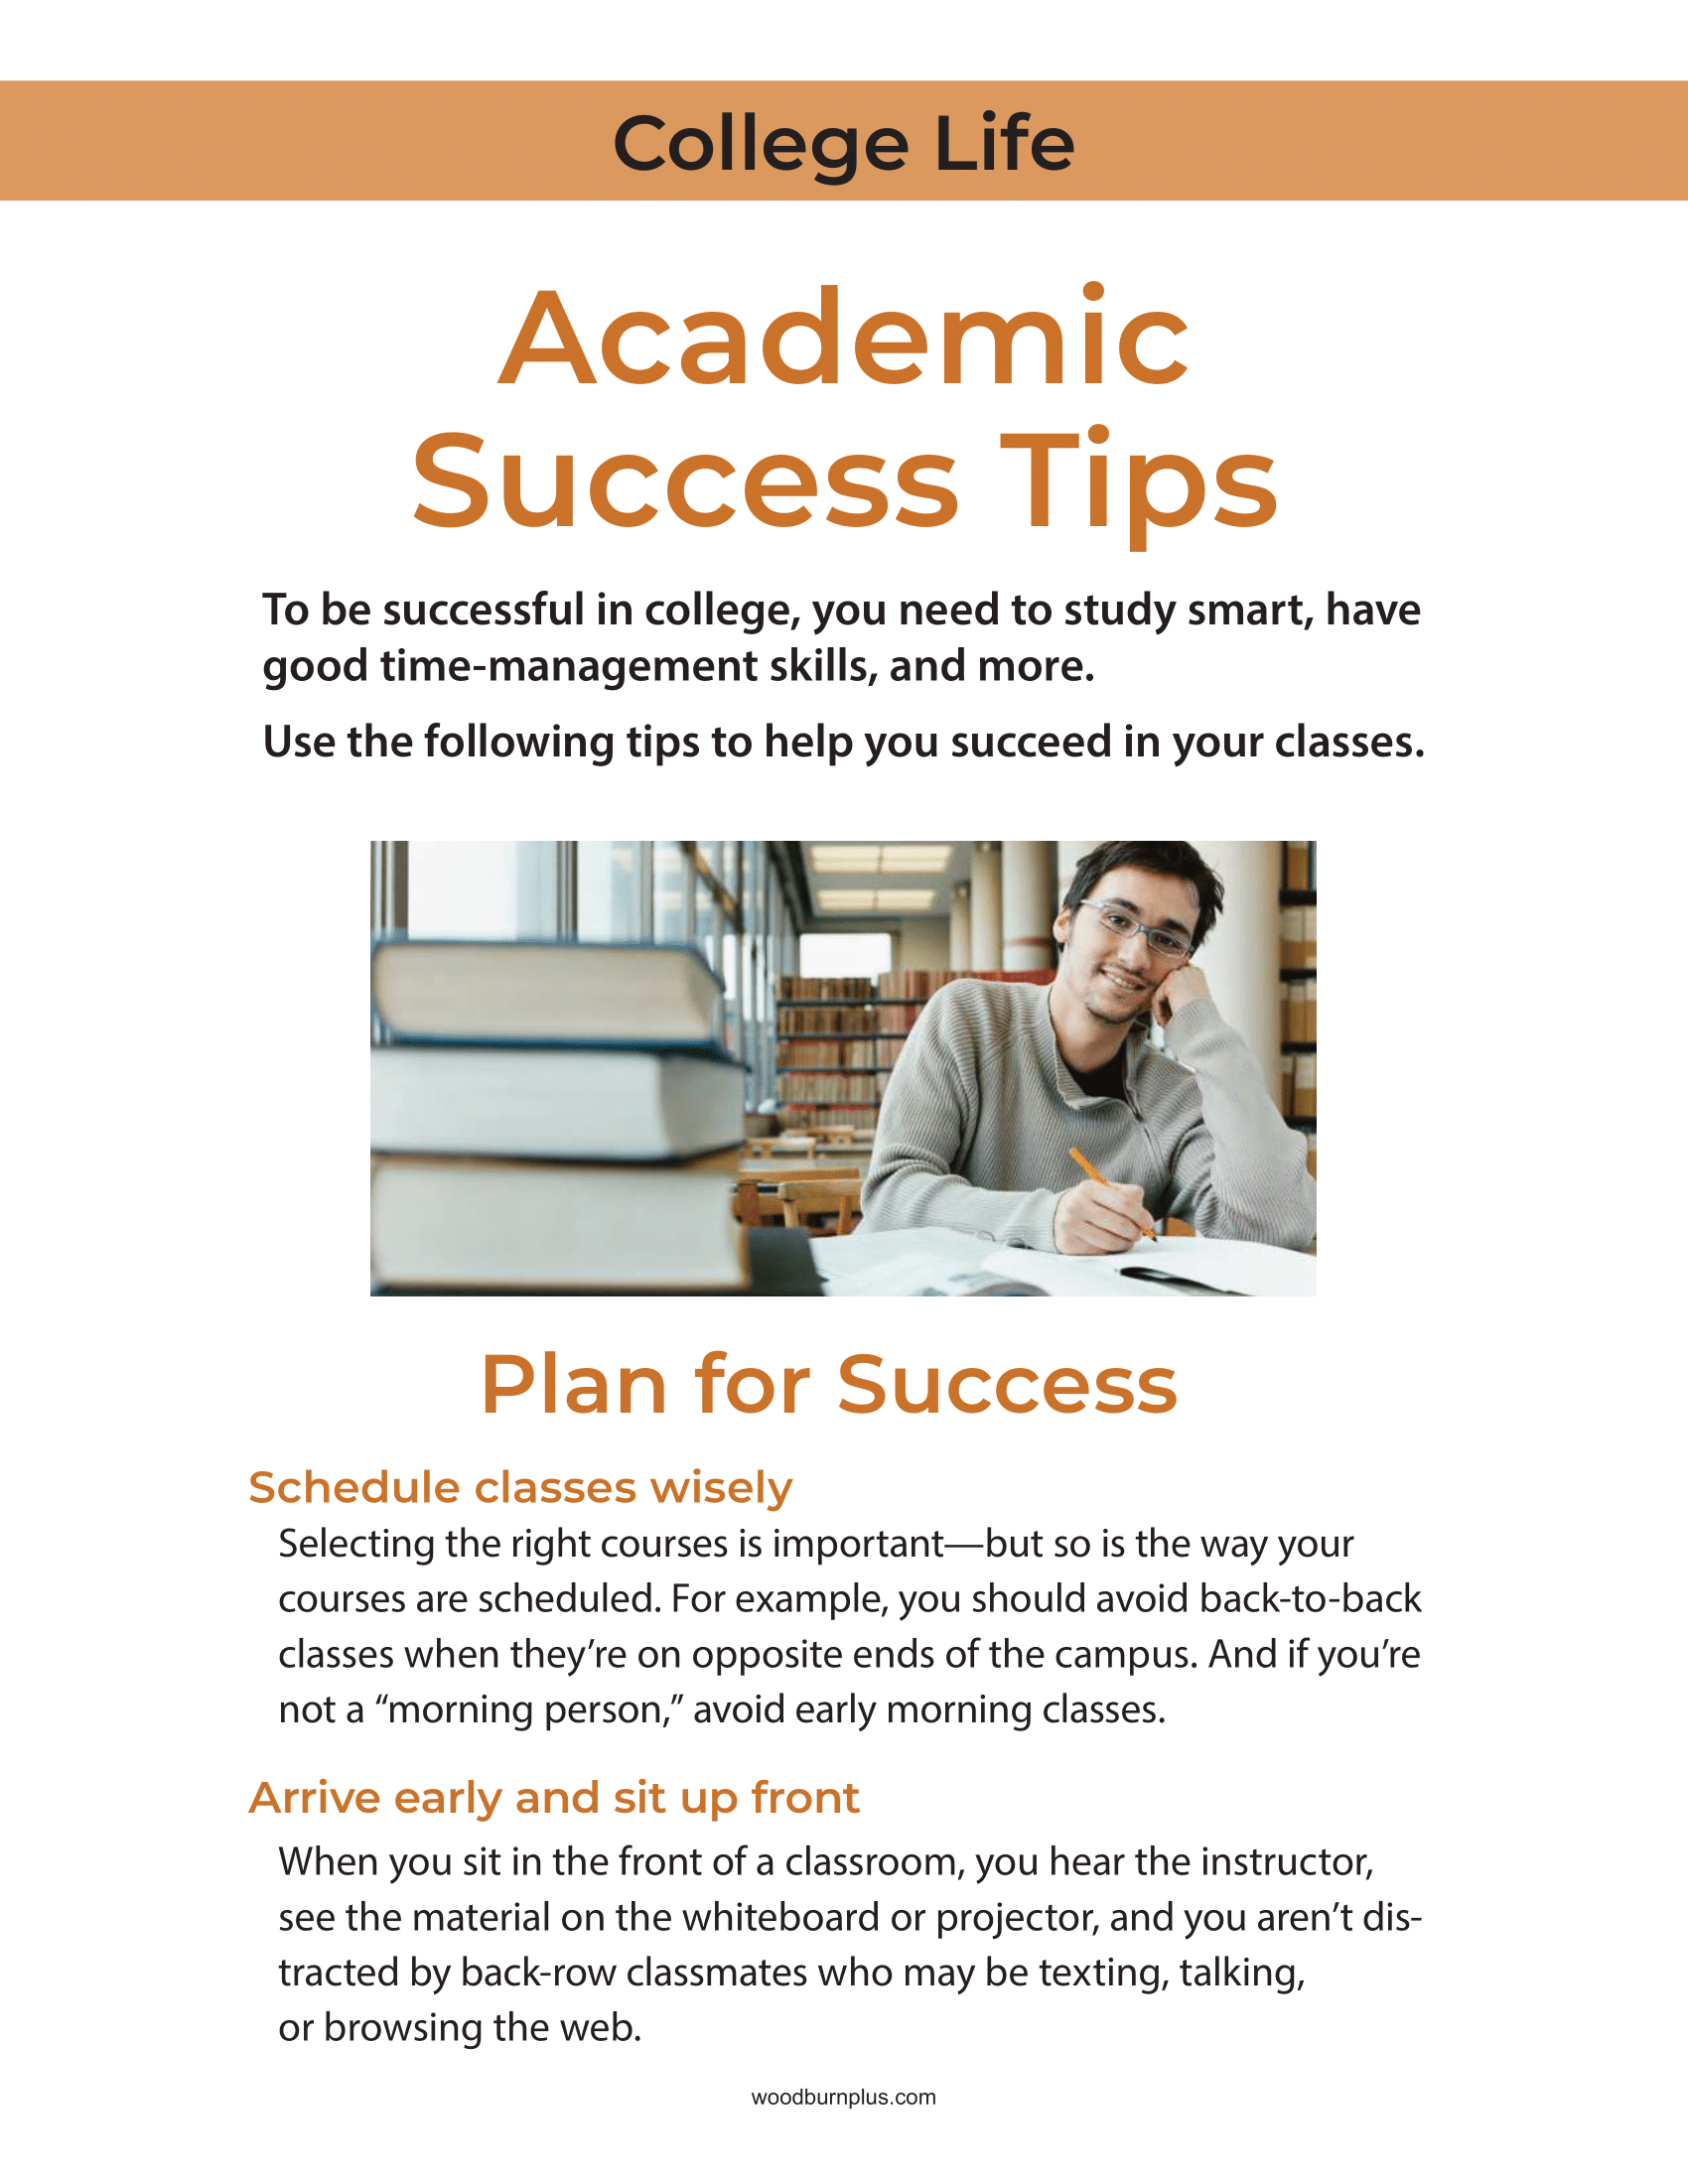 College Life - Academic Success Tips